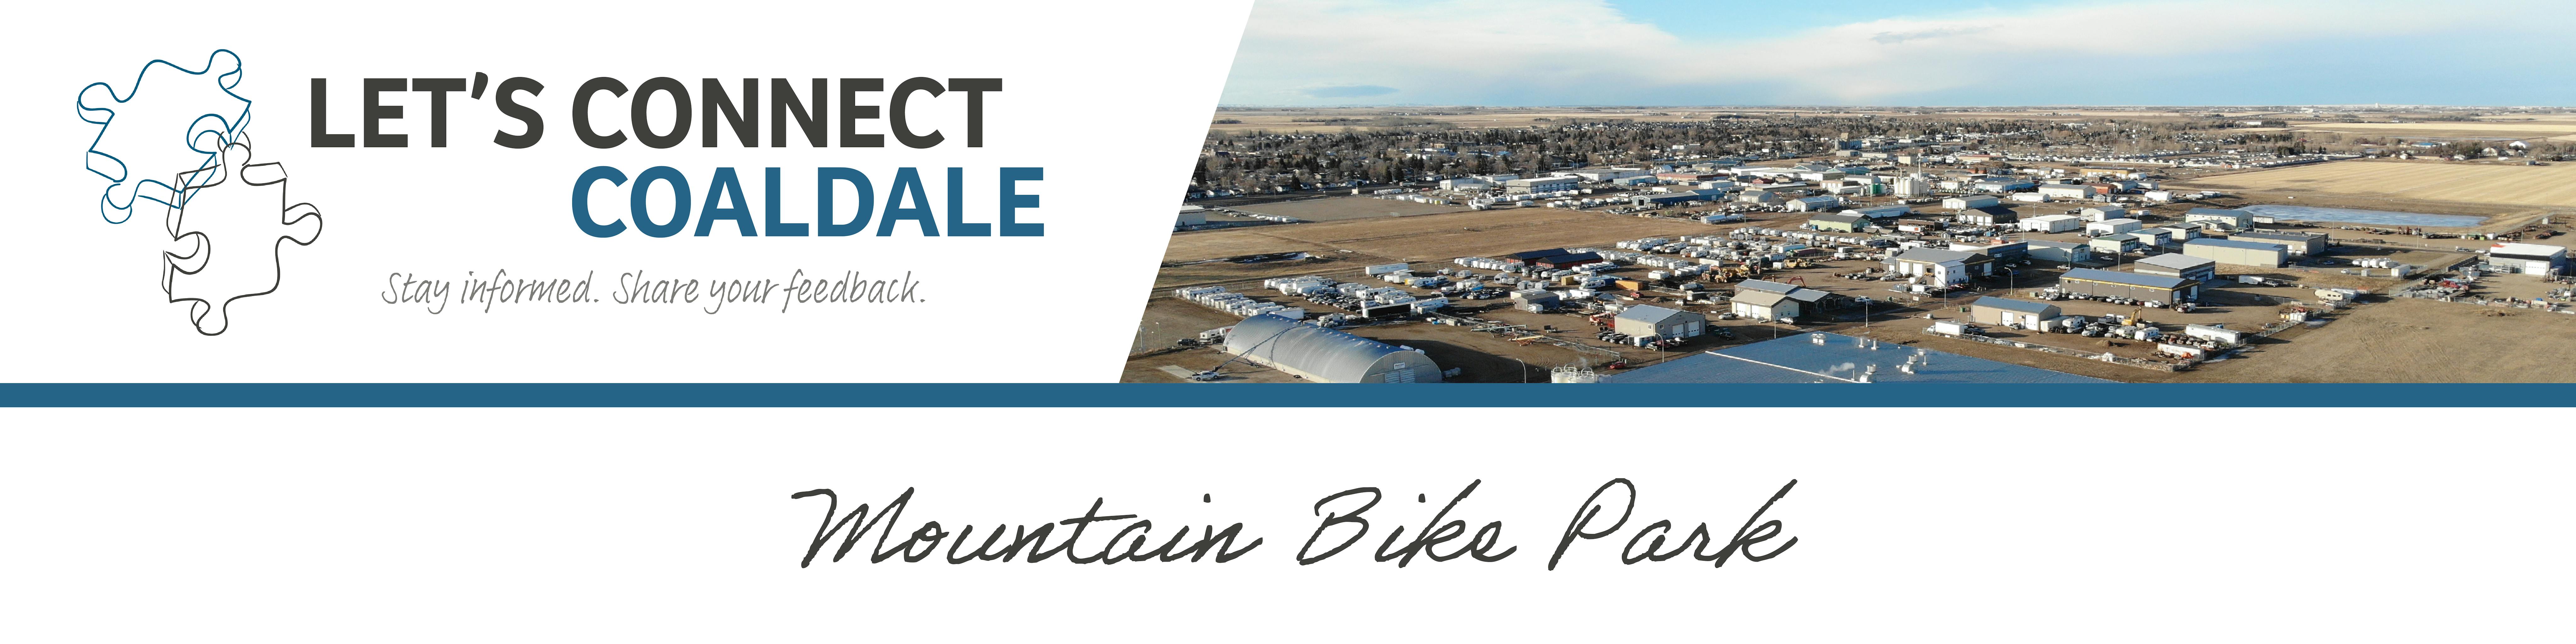 The Mountain Bike Park 